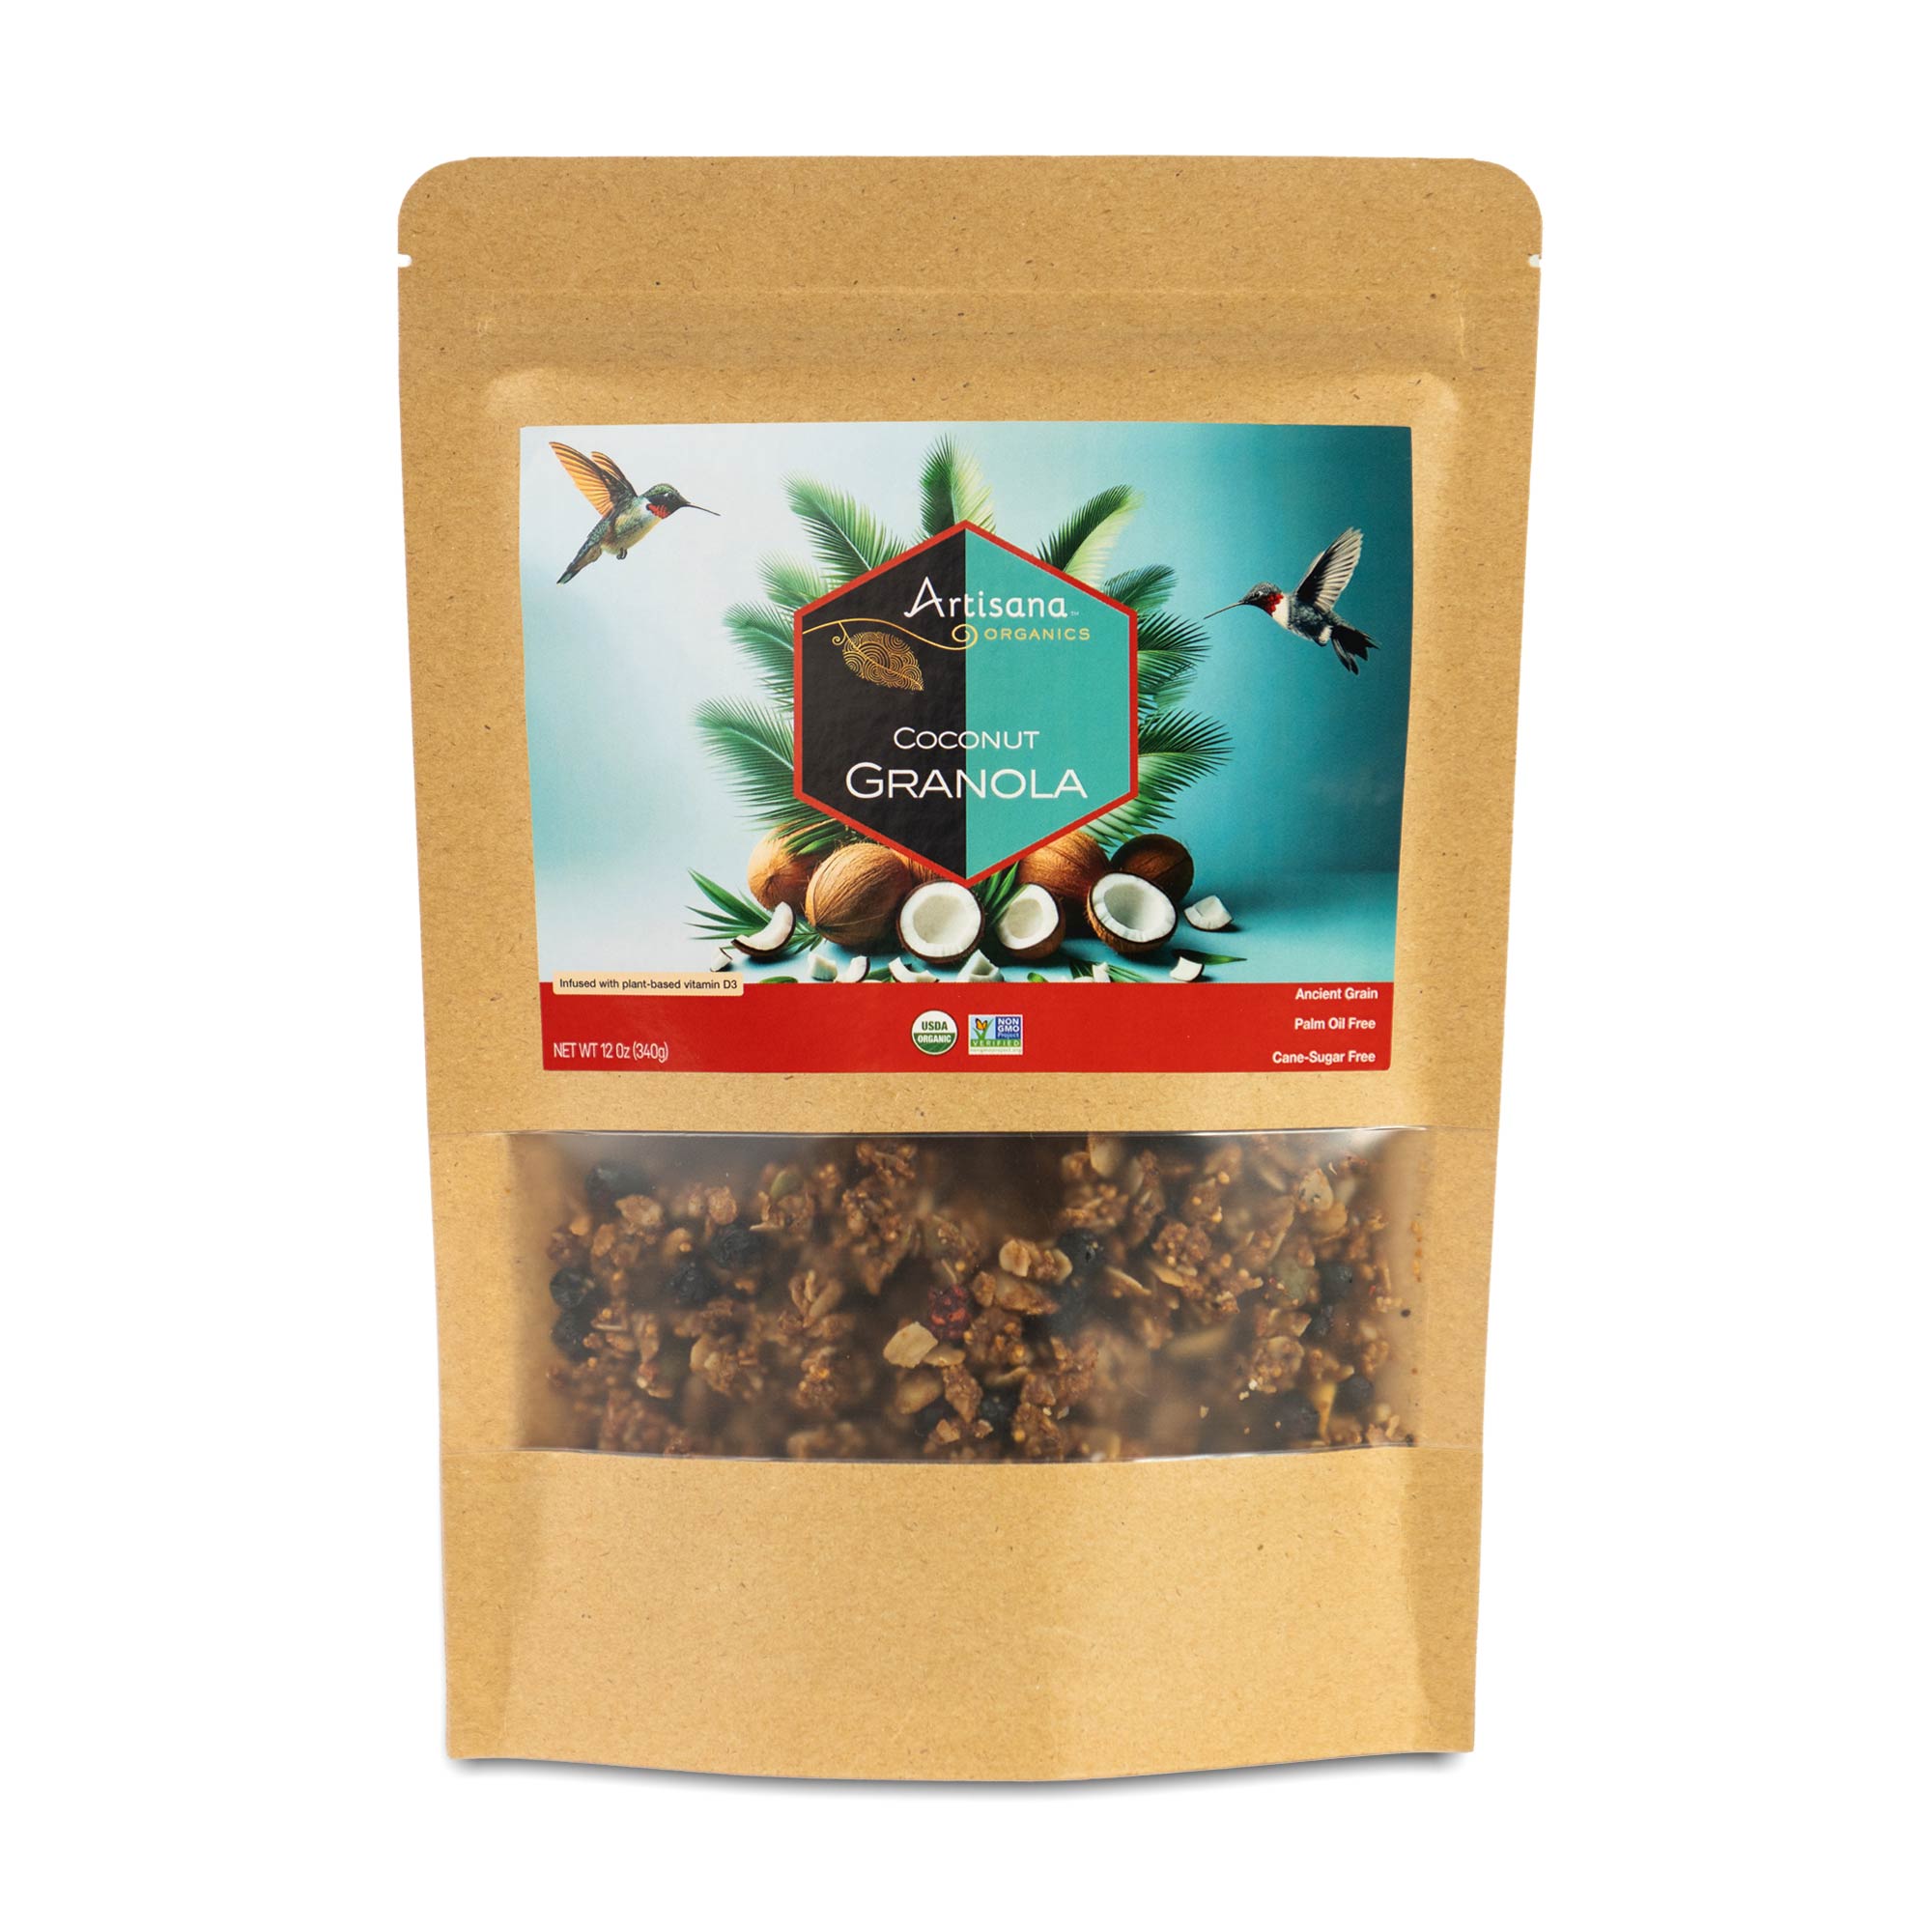 Artisana Organics Coconut Granola in 12oz bag